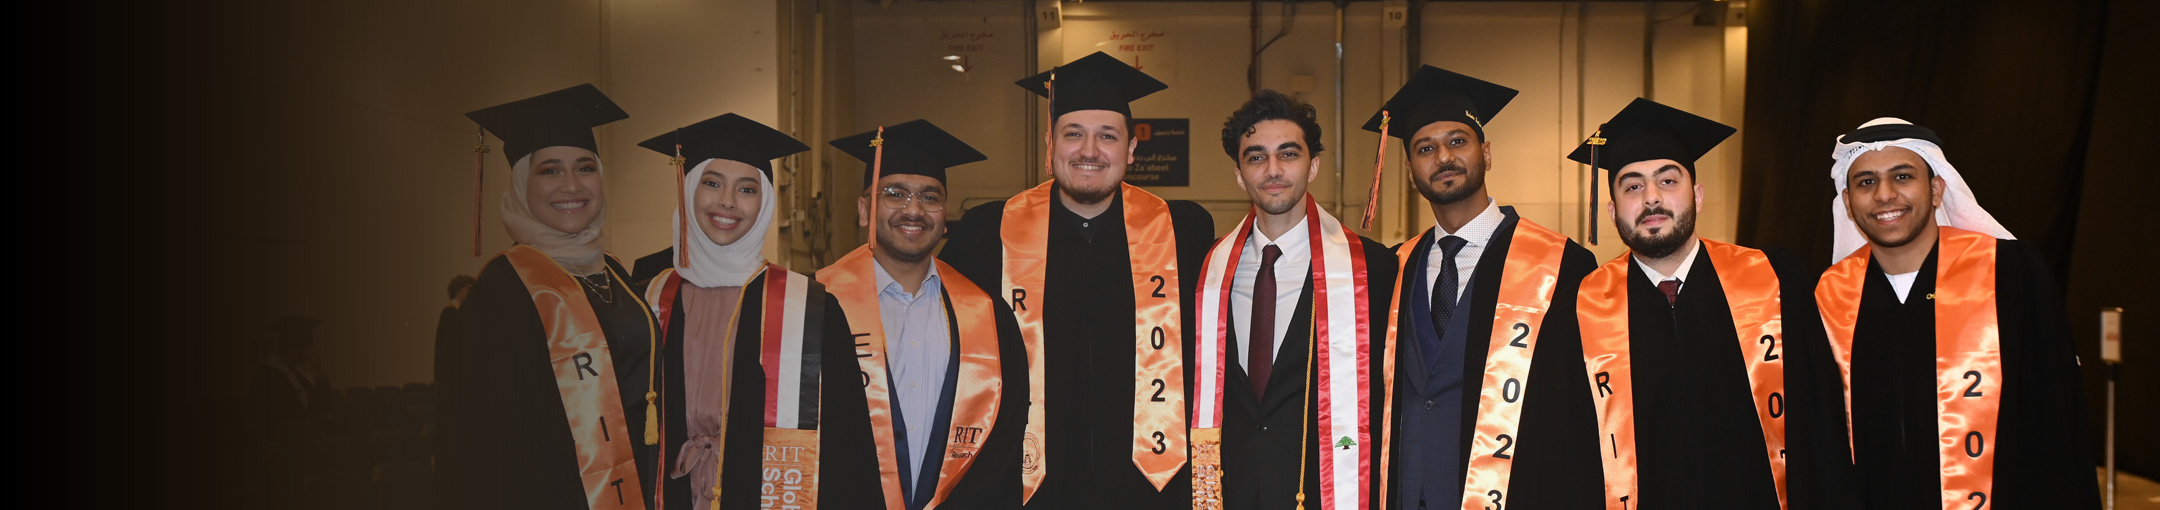 Group photo of graduates